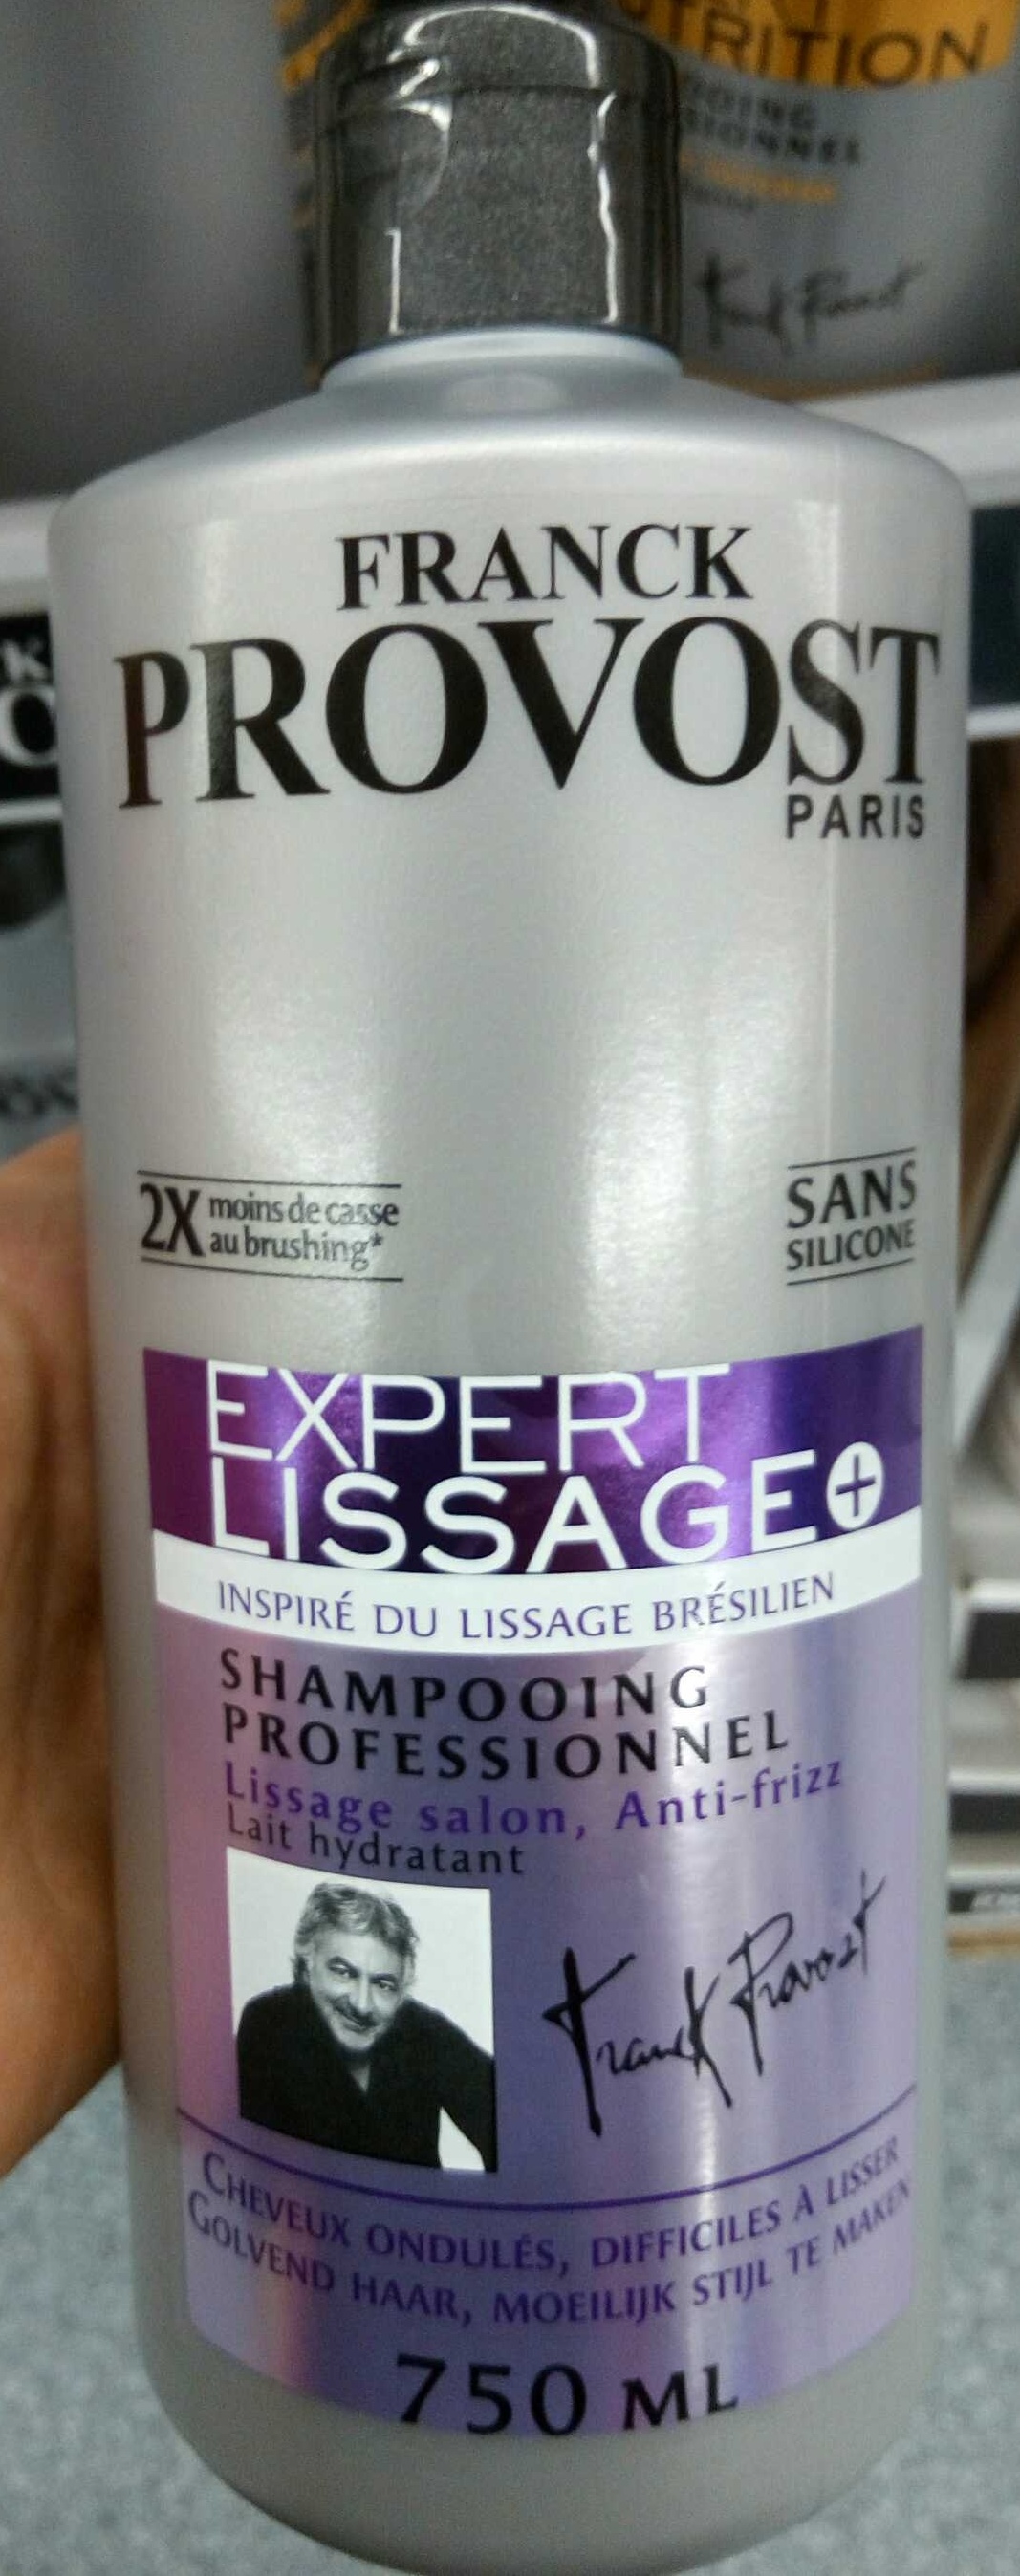 Expert lissage+ shampooing professionnel - Produto - fr